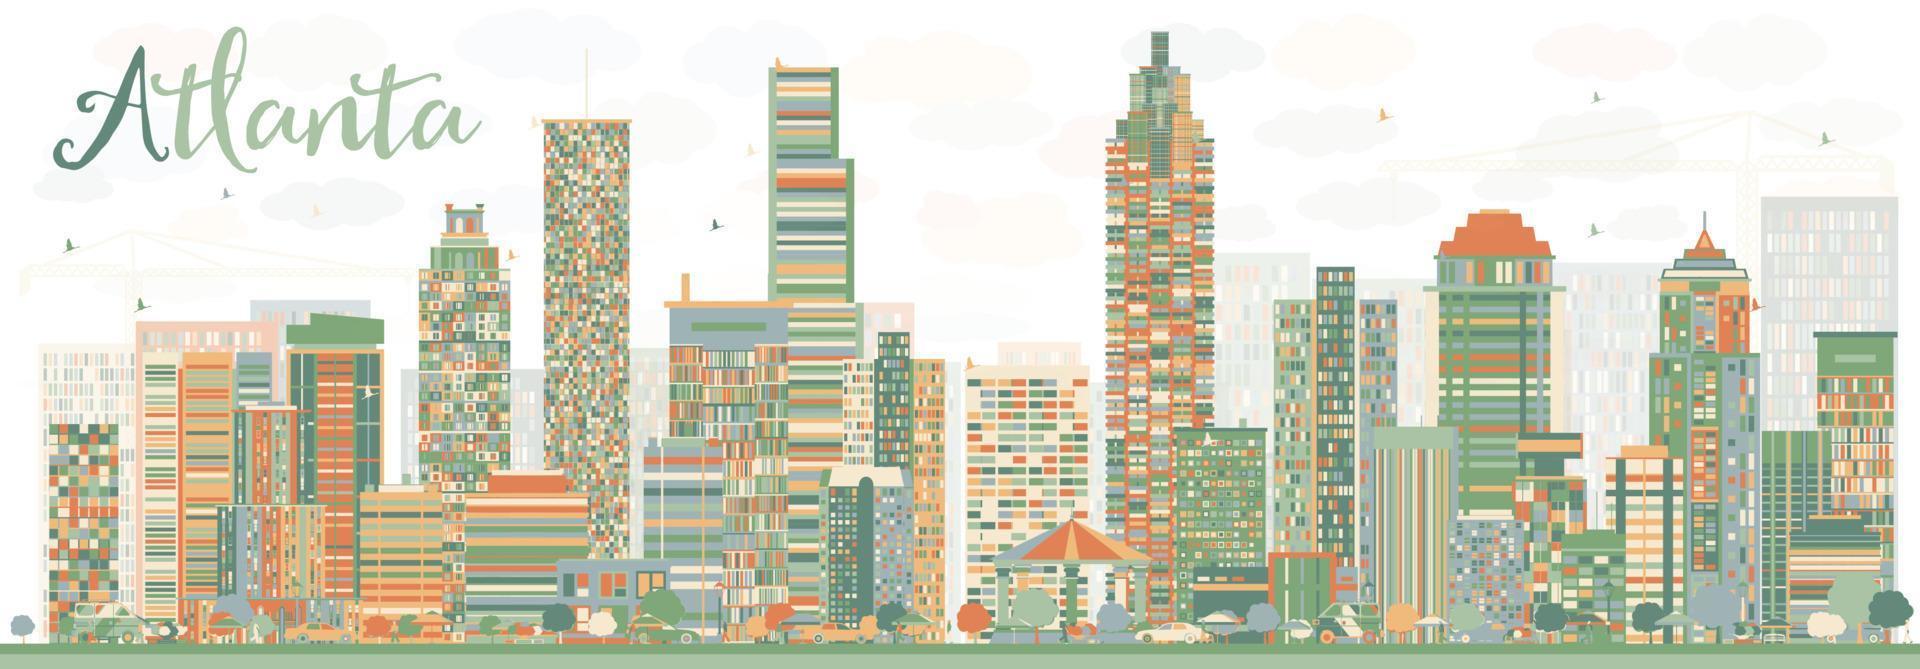 Abstract Atlanta Skyline with Color Buildings. vector